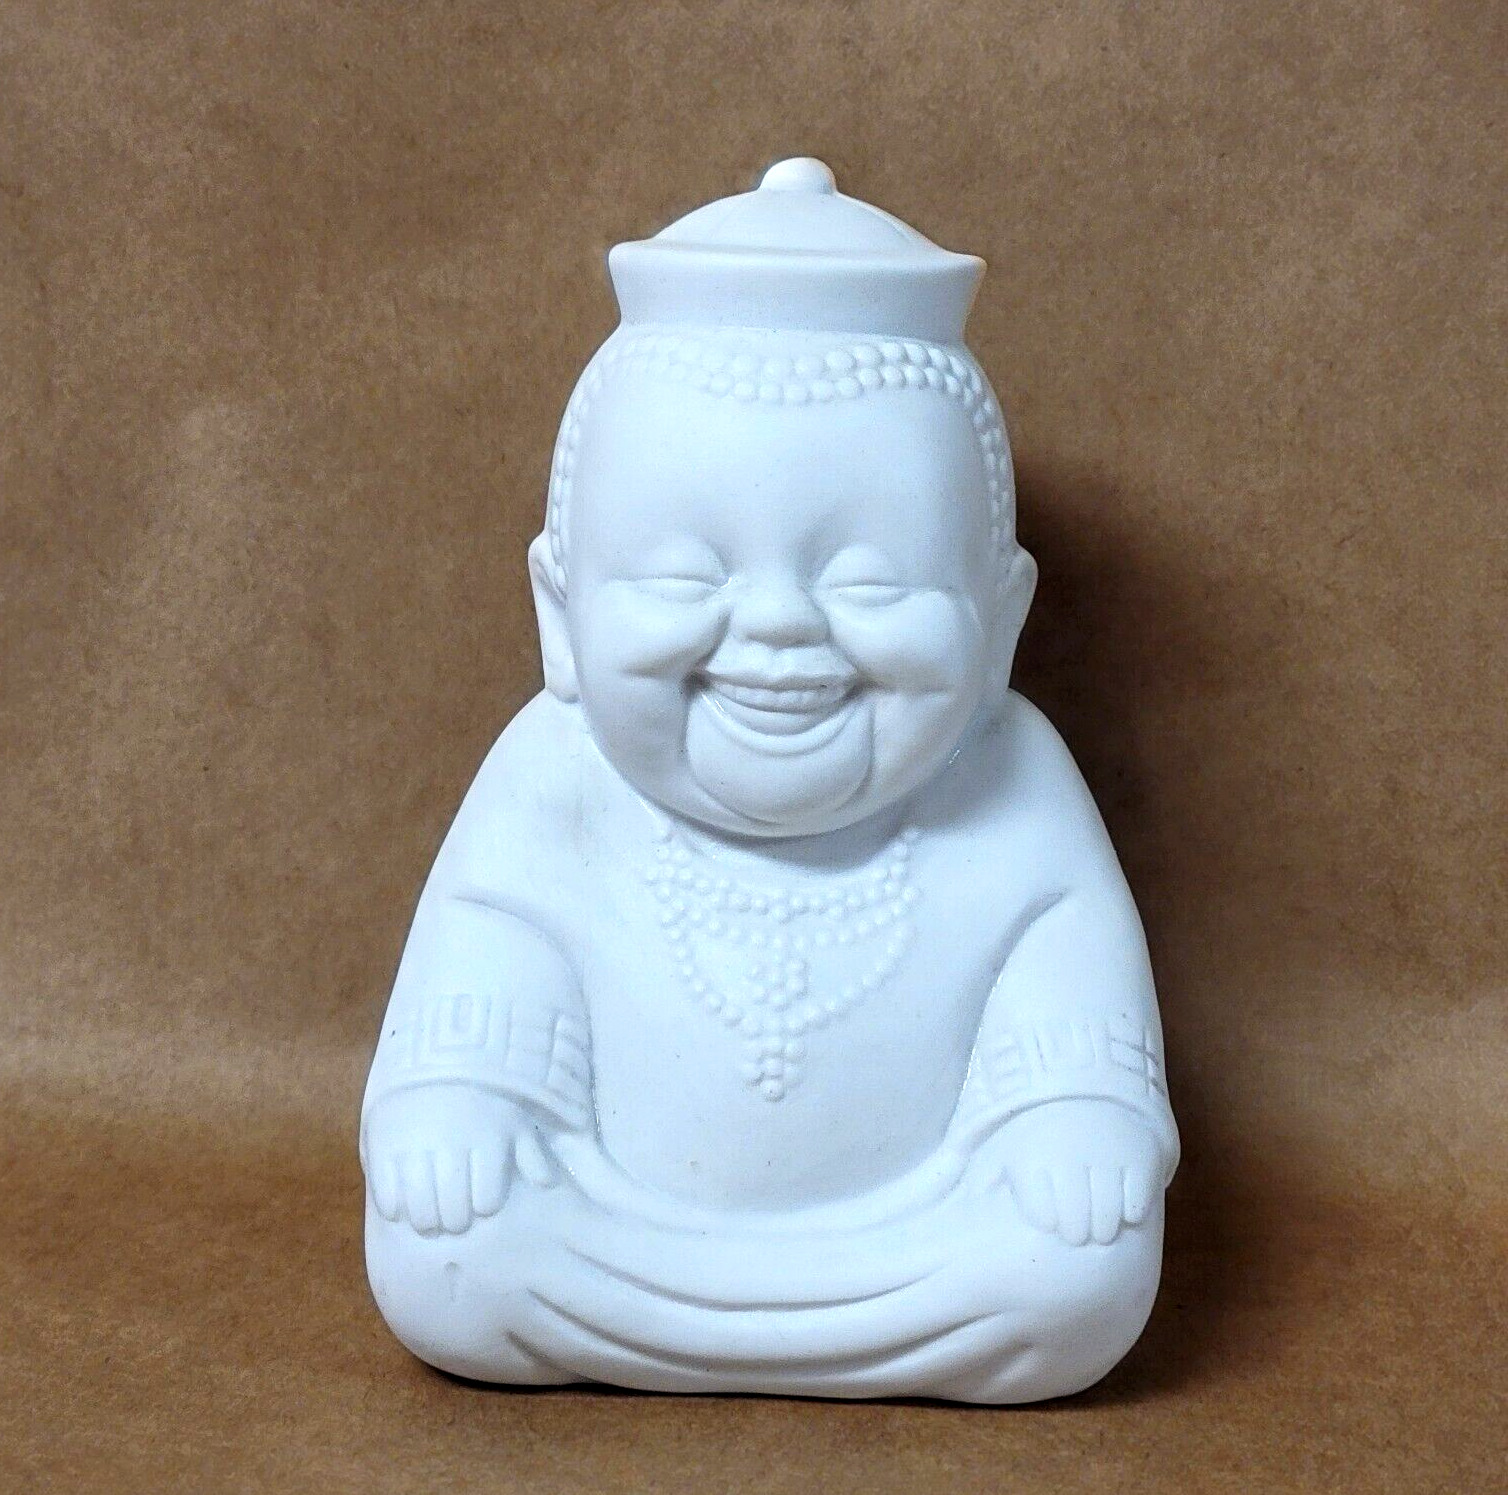 VTG Smiling Seated Buddha Statue Tea Light Incense Burner White Porcelain 5 Inch